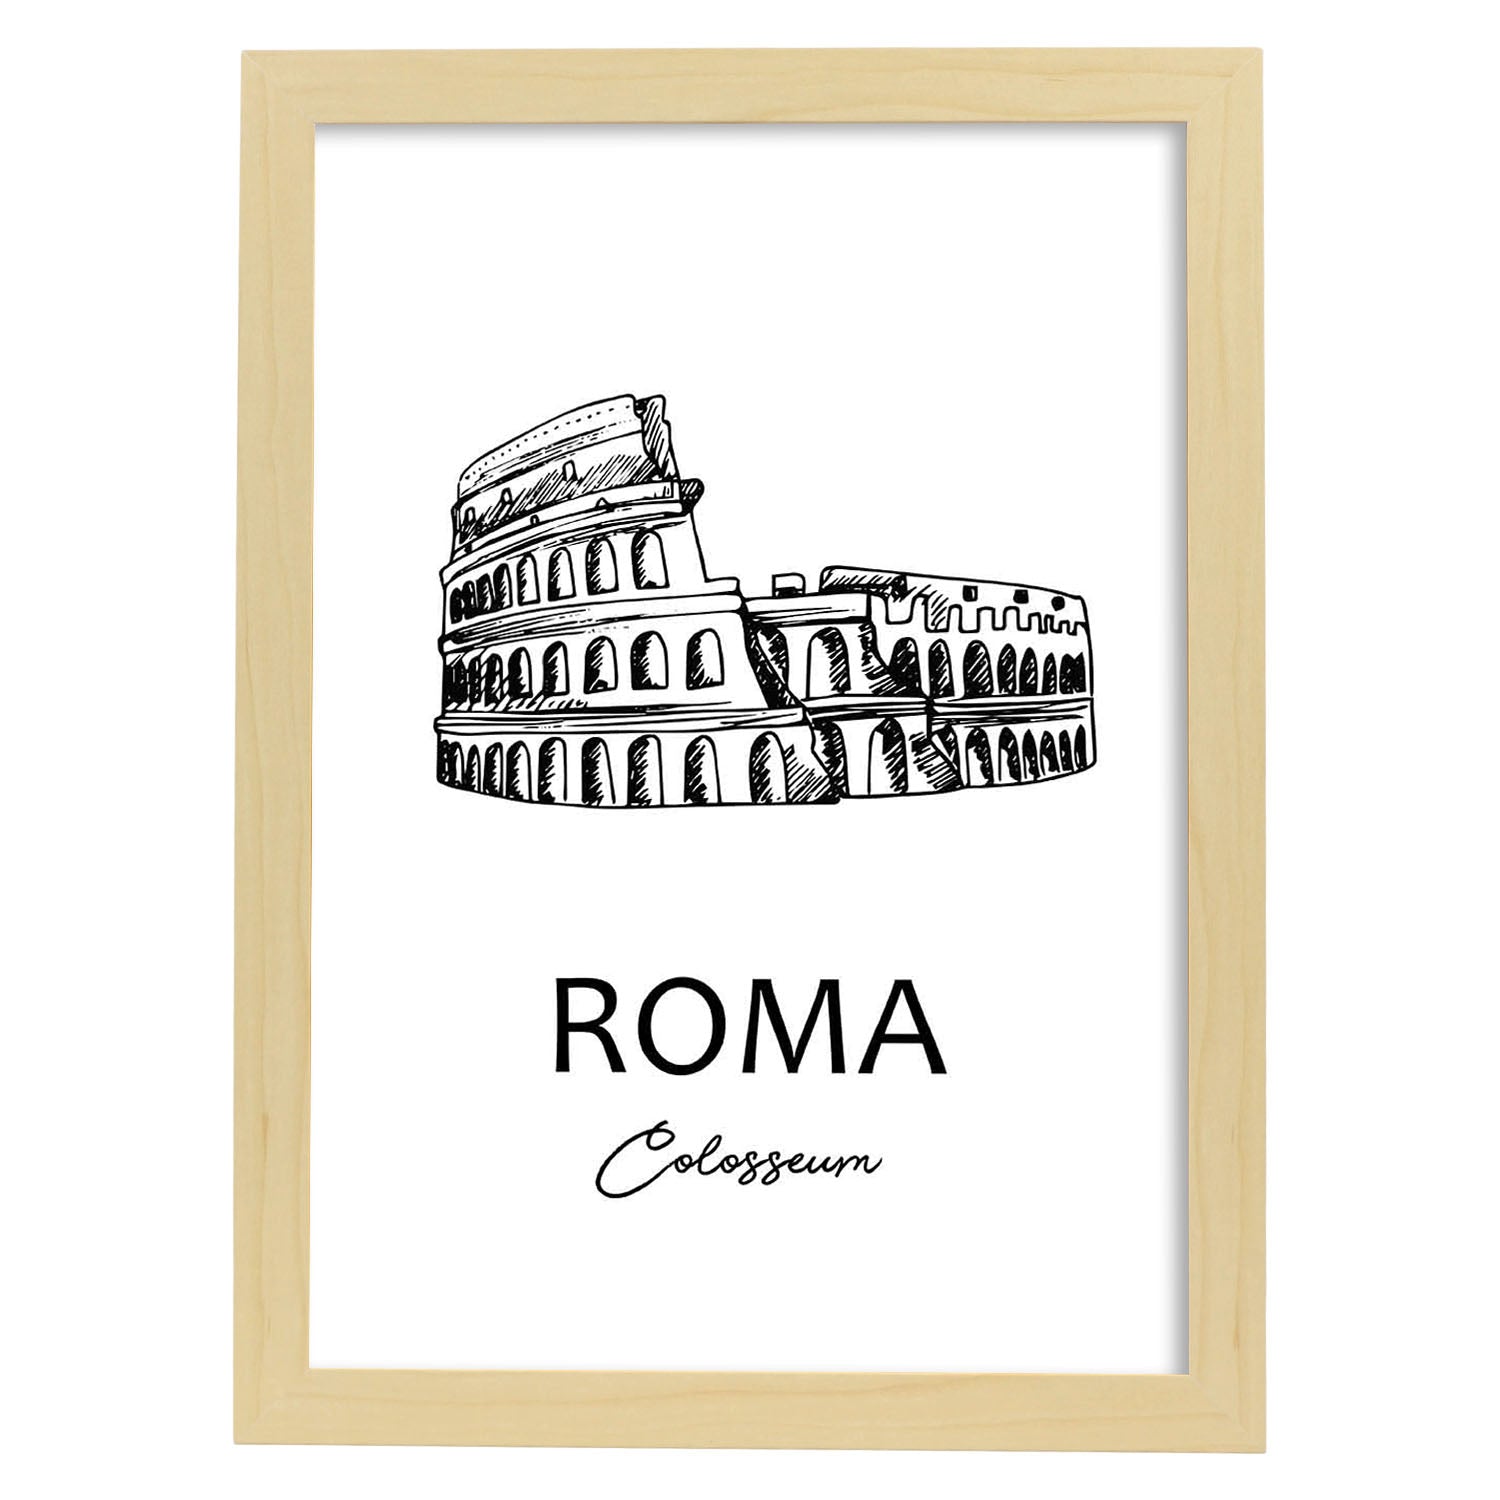 Poster de Roma - El Coliseo. Láminas con monumentos de ciudades.-Artwork-Nacnic-A3-Marco Madera clara-Nacnic Estudio SL